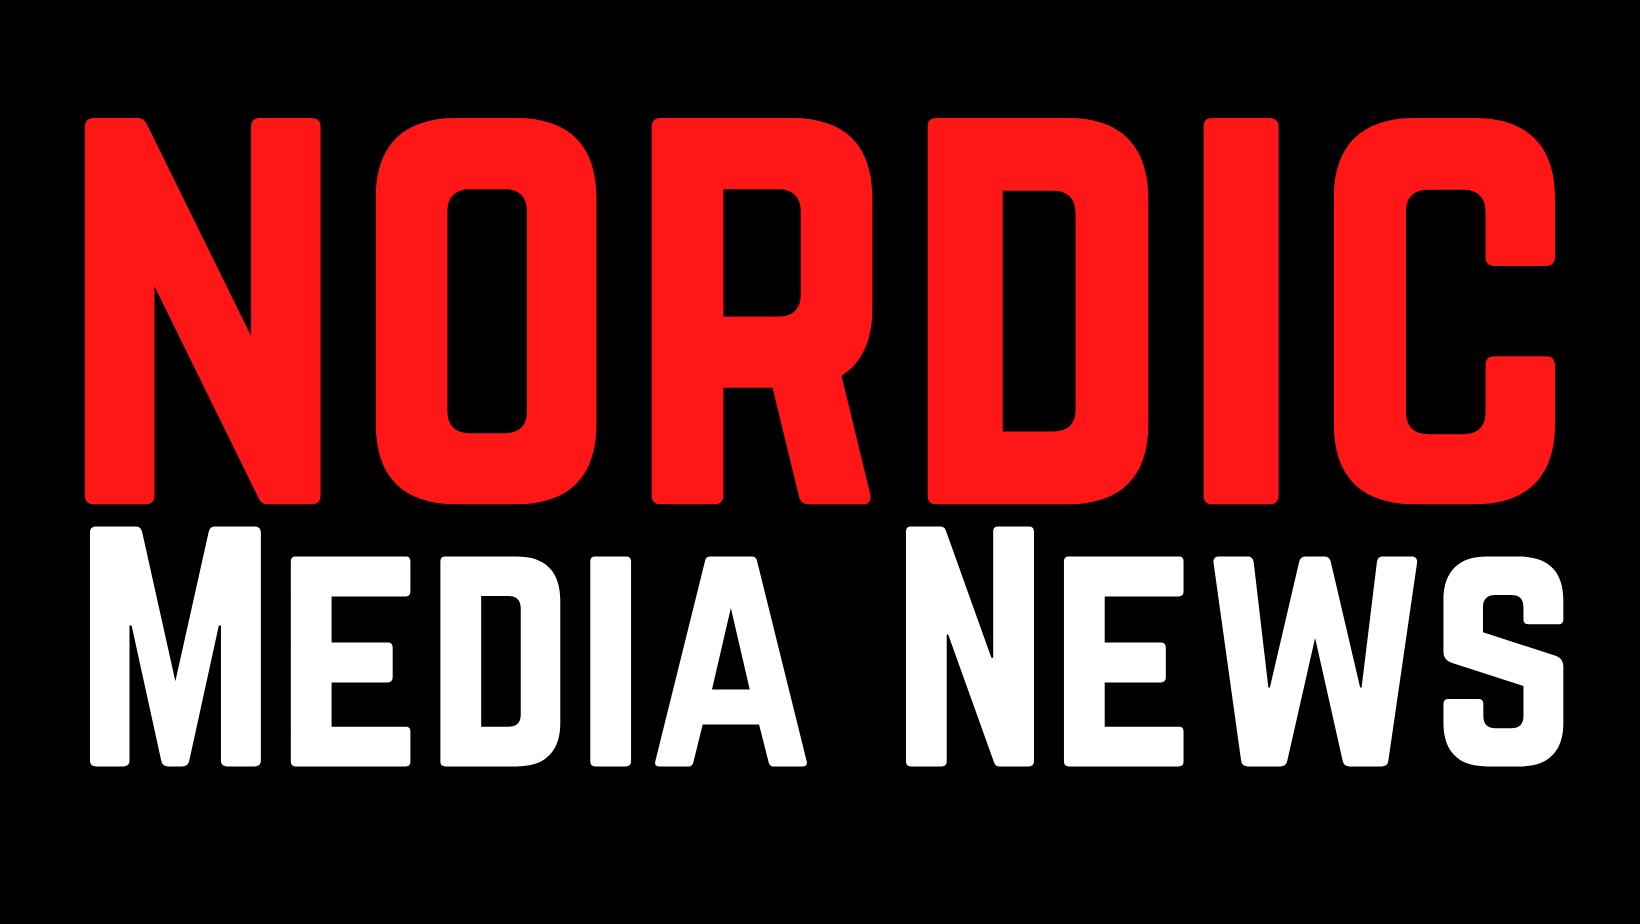 Nordic Media News - Broadcast, TV and Film News